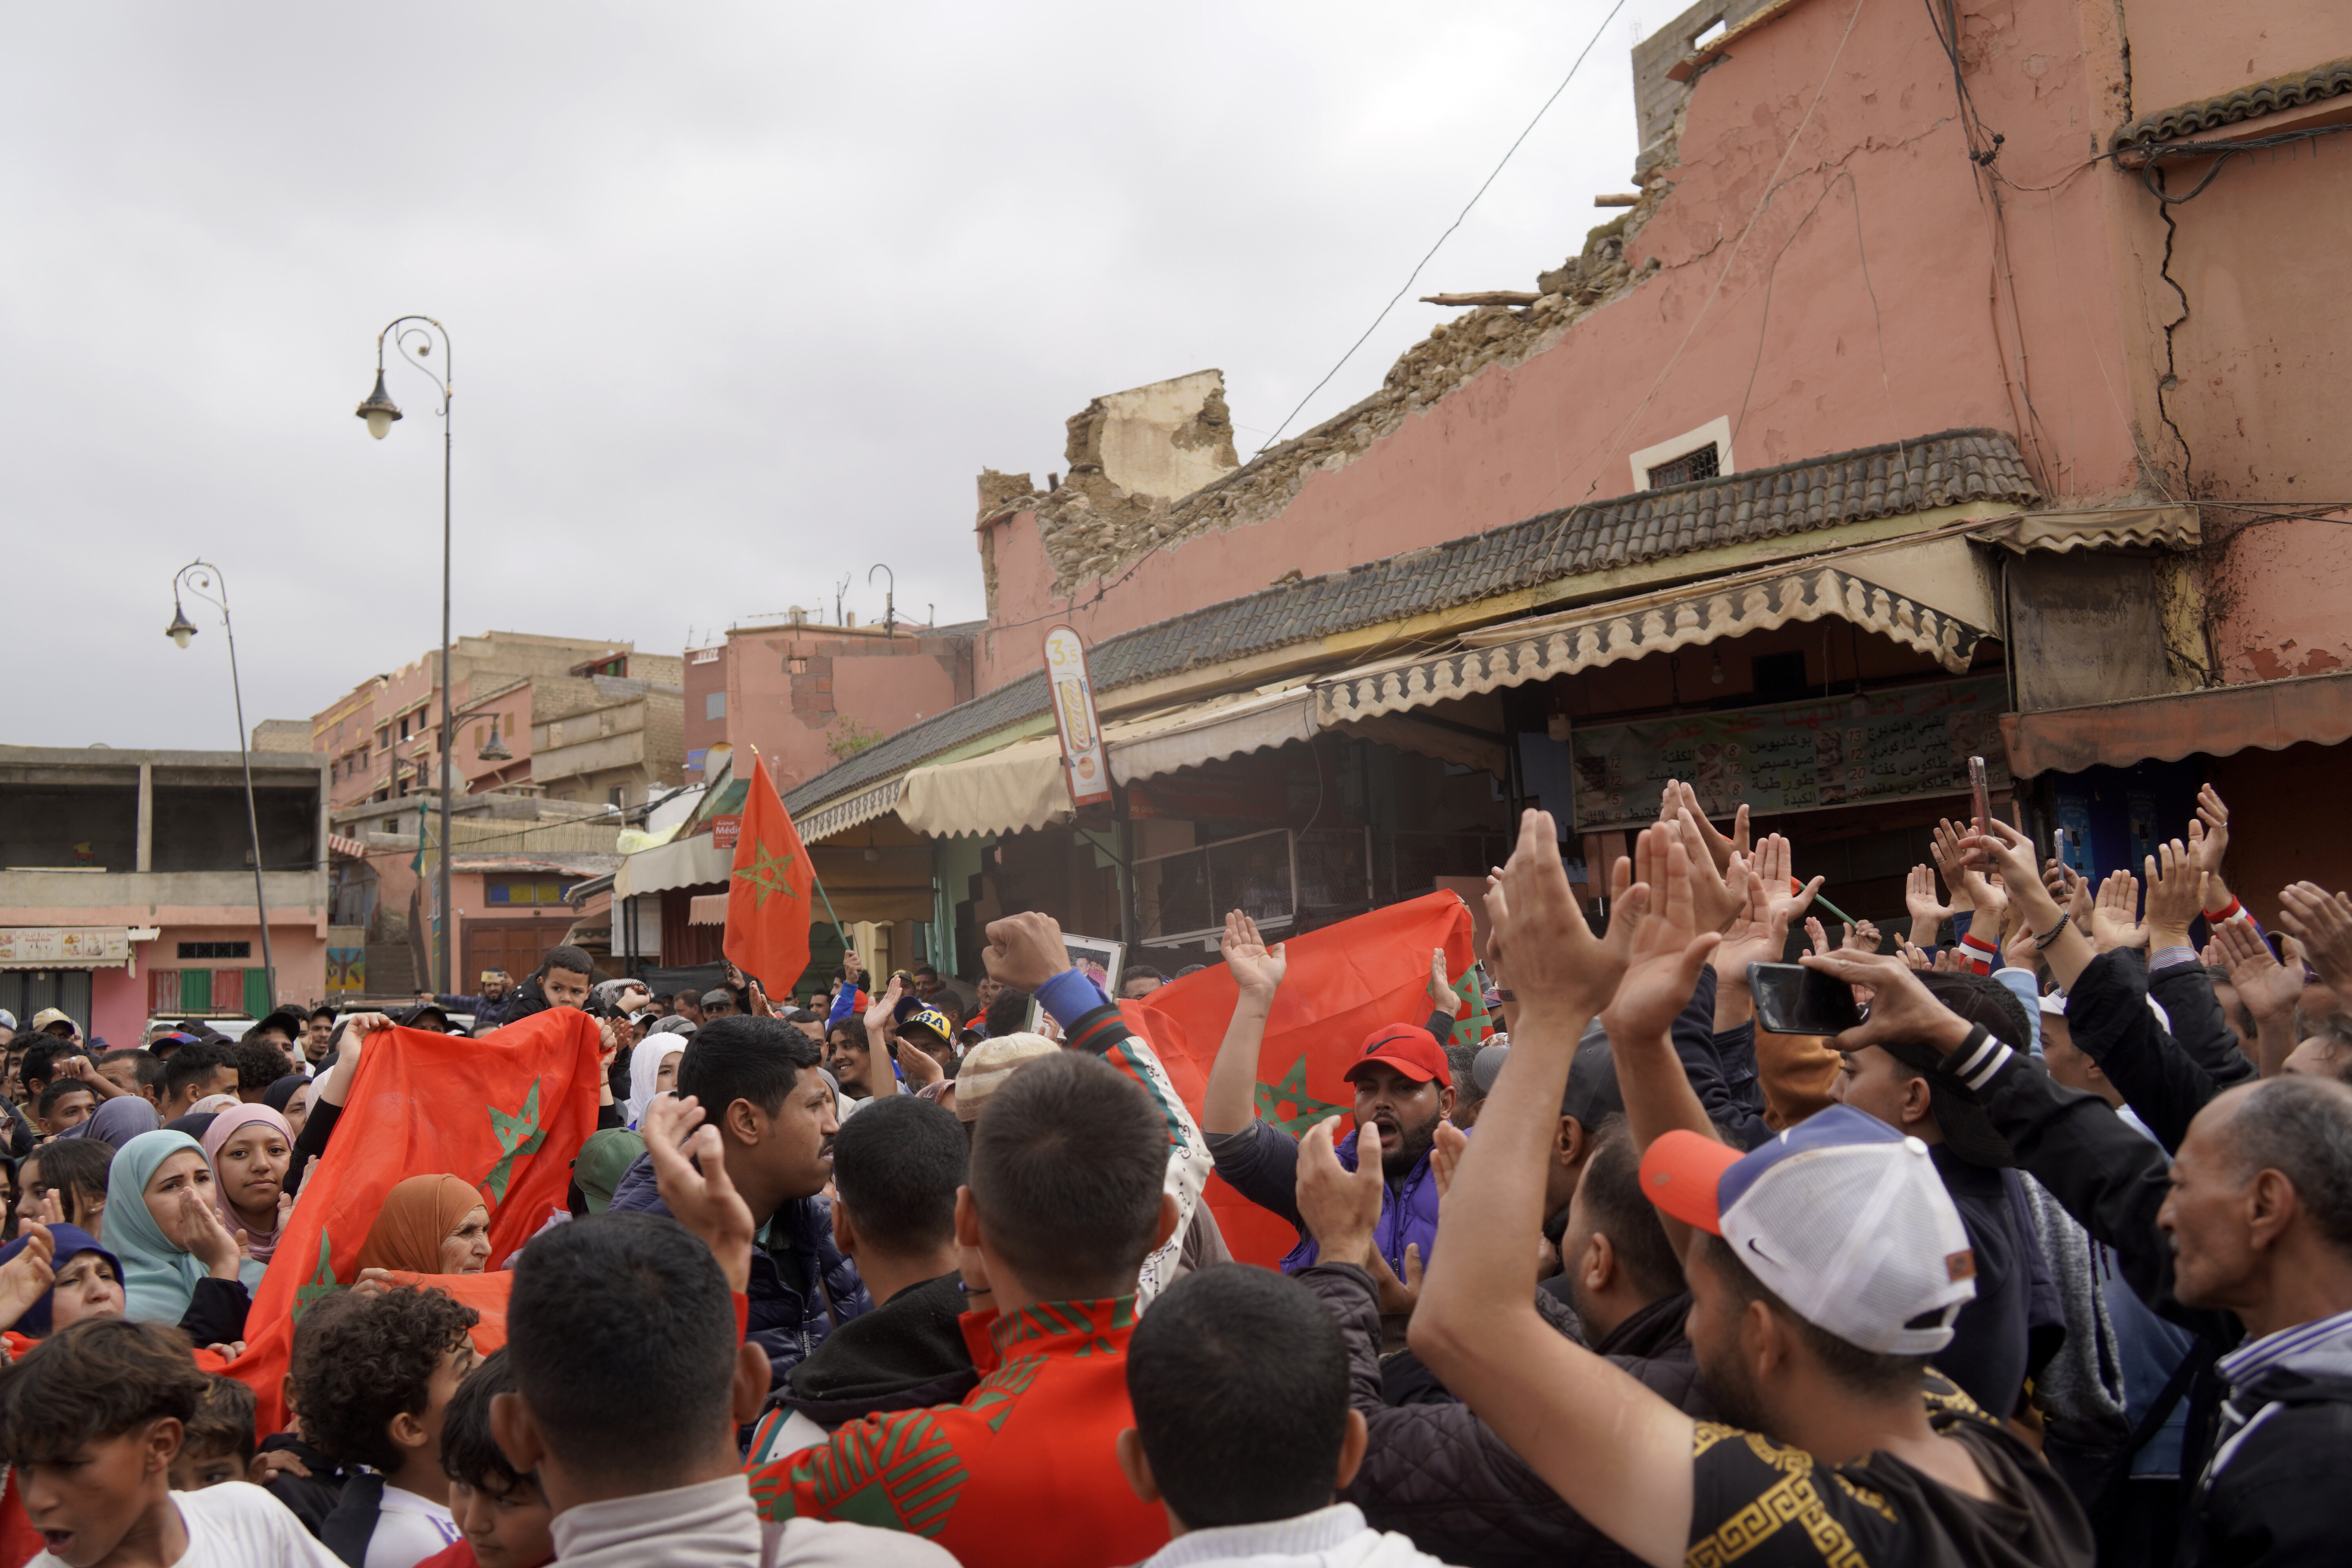 Morocco earthquake: Inside Amizmiz, the tourist town 'ripped apart